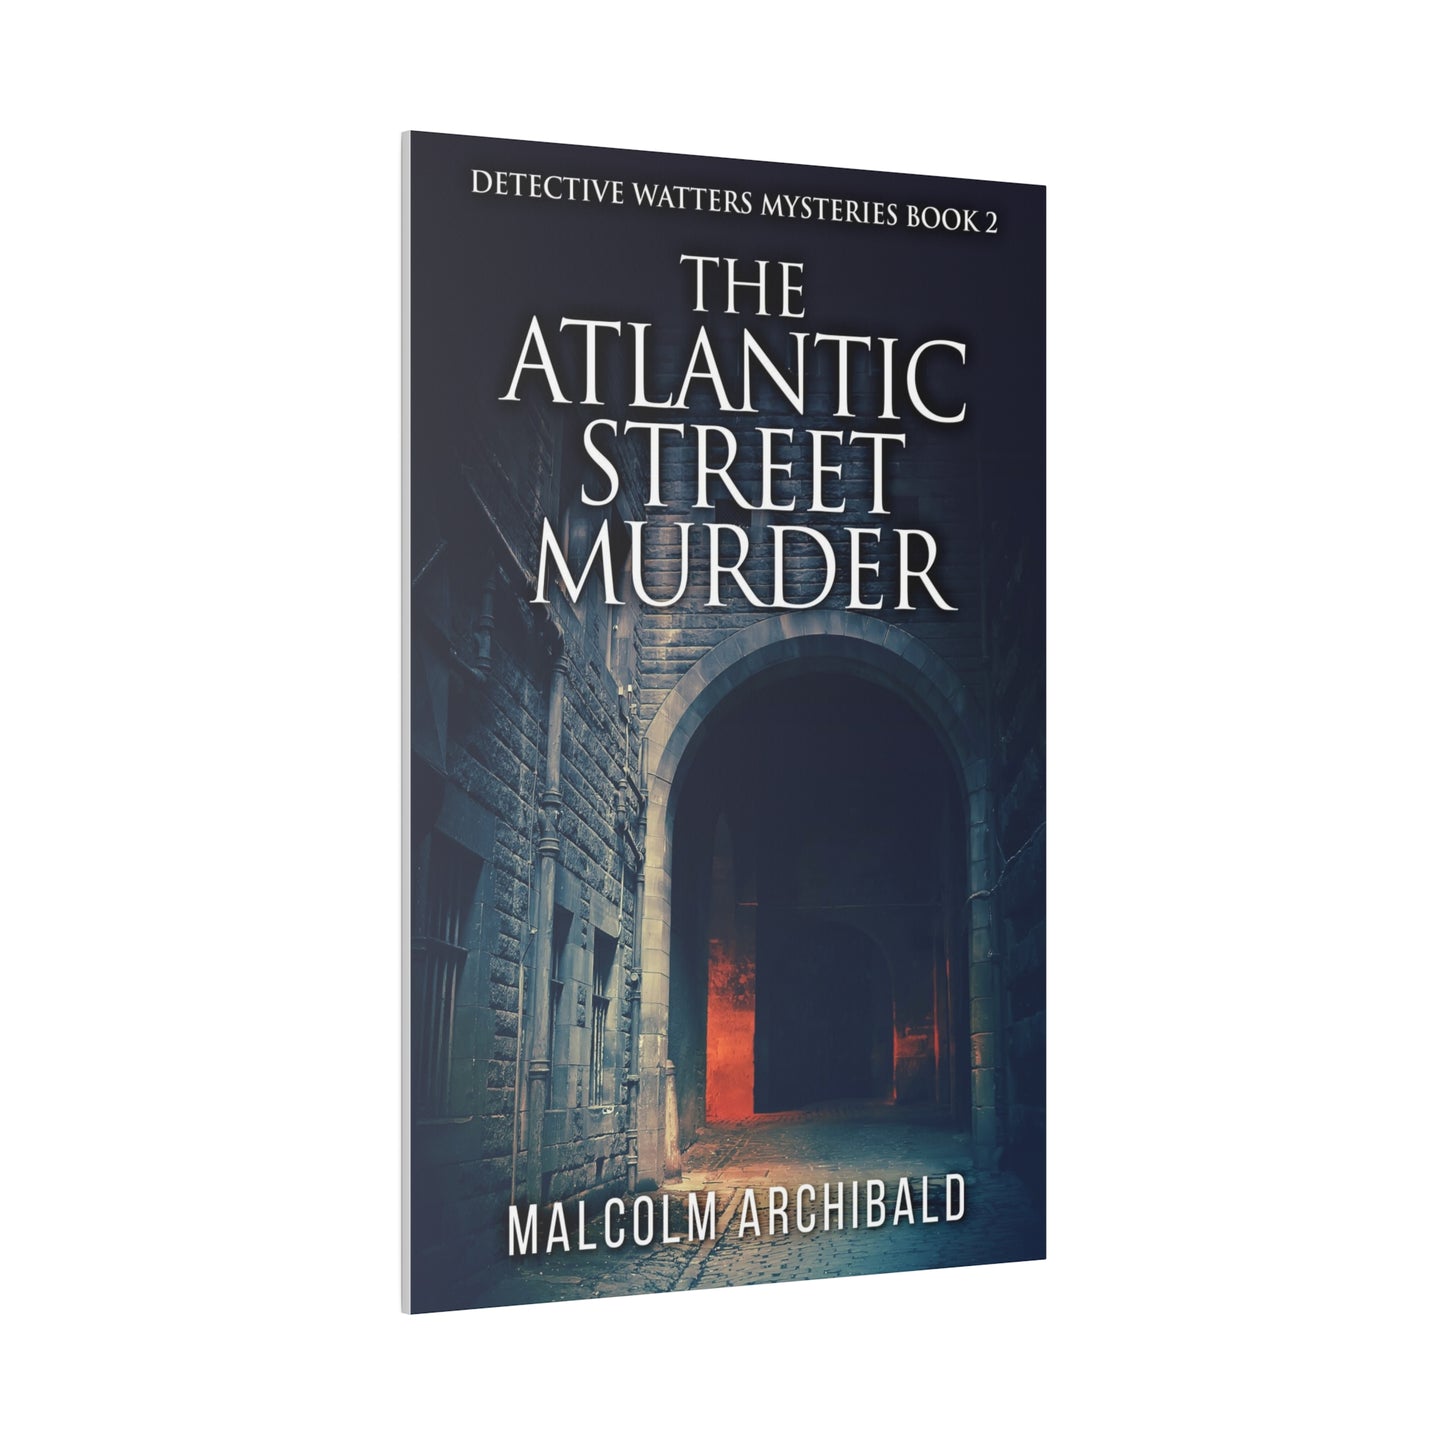 The Atlantic Street Murder - Canvas